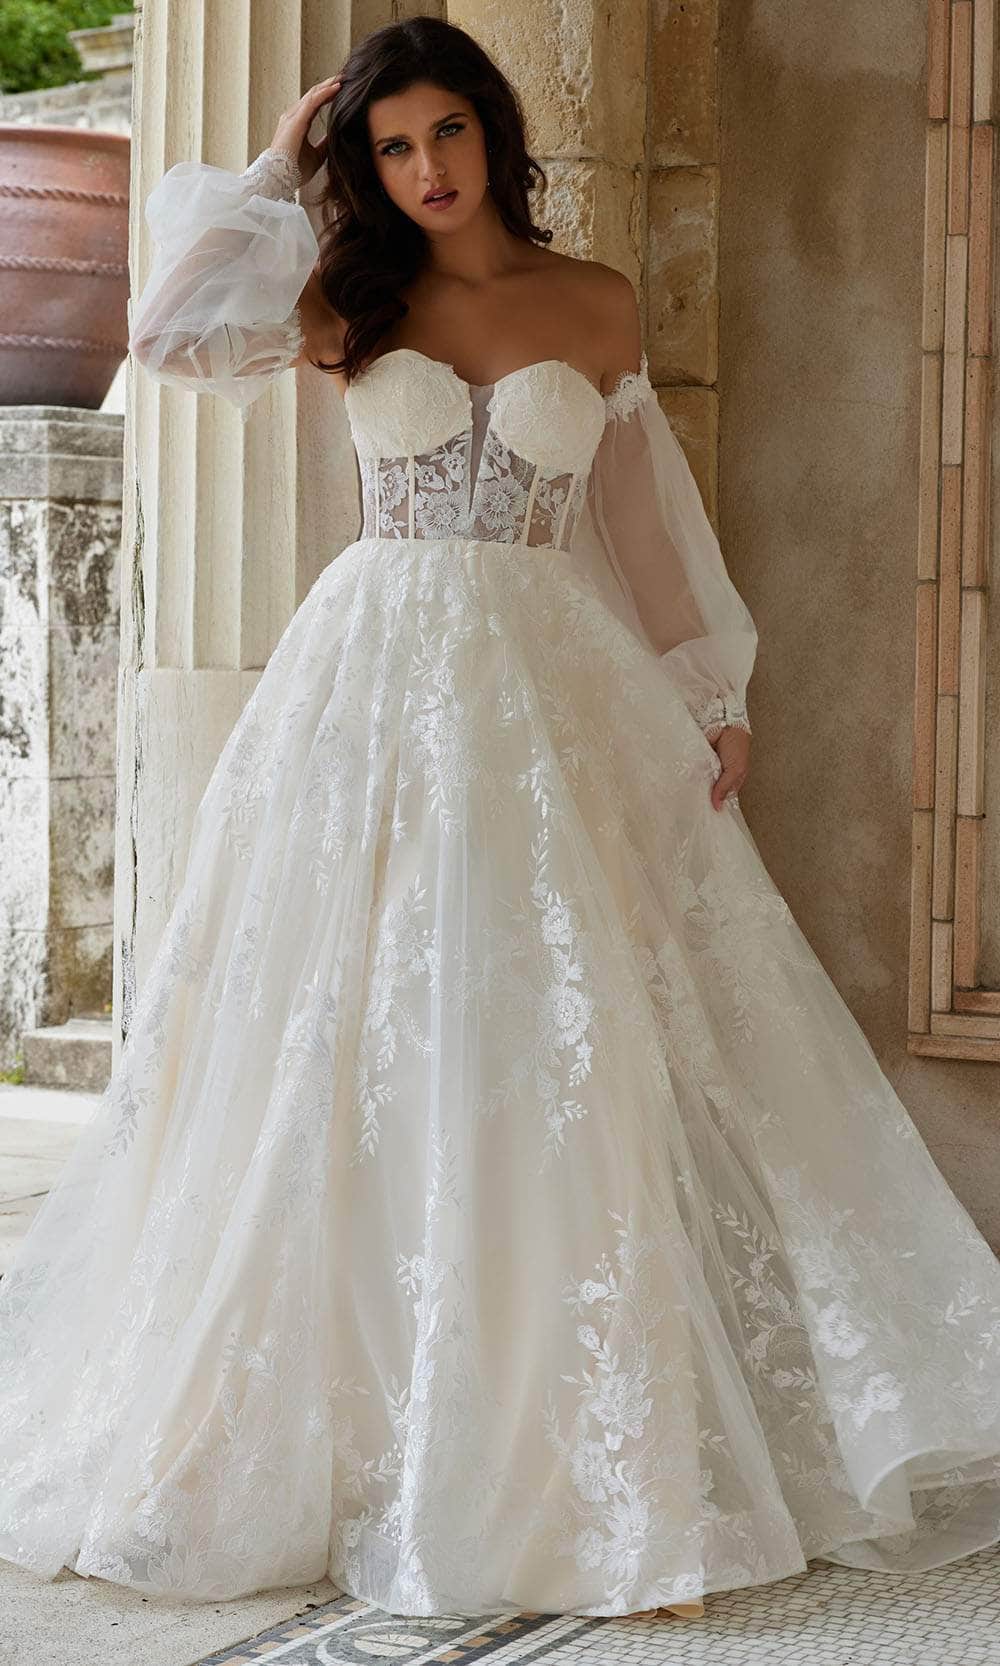 Jovani Dress JB05349  Lace A line Ivory Wedding Dress